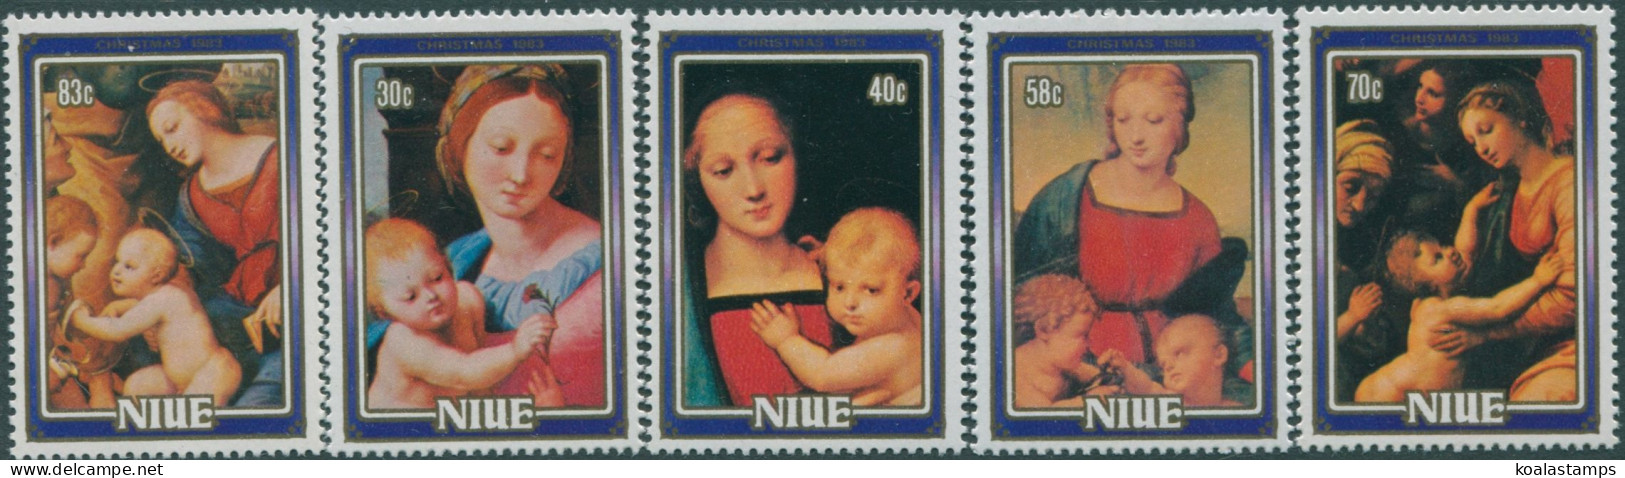 Niue 1983 SG503-507 Christmas Set MNH - Niue